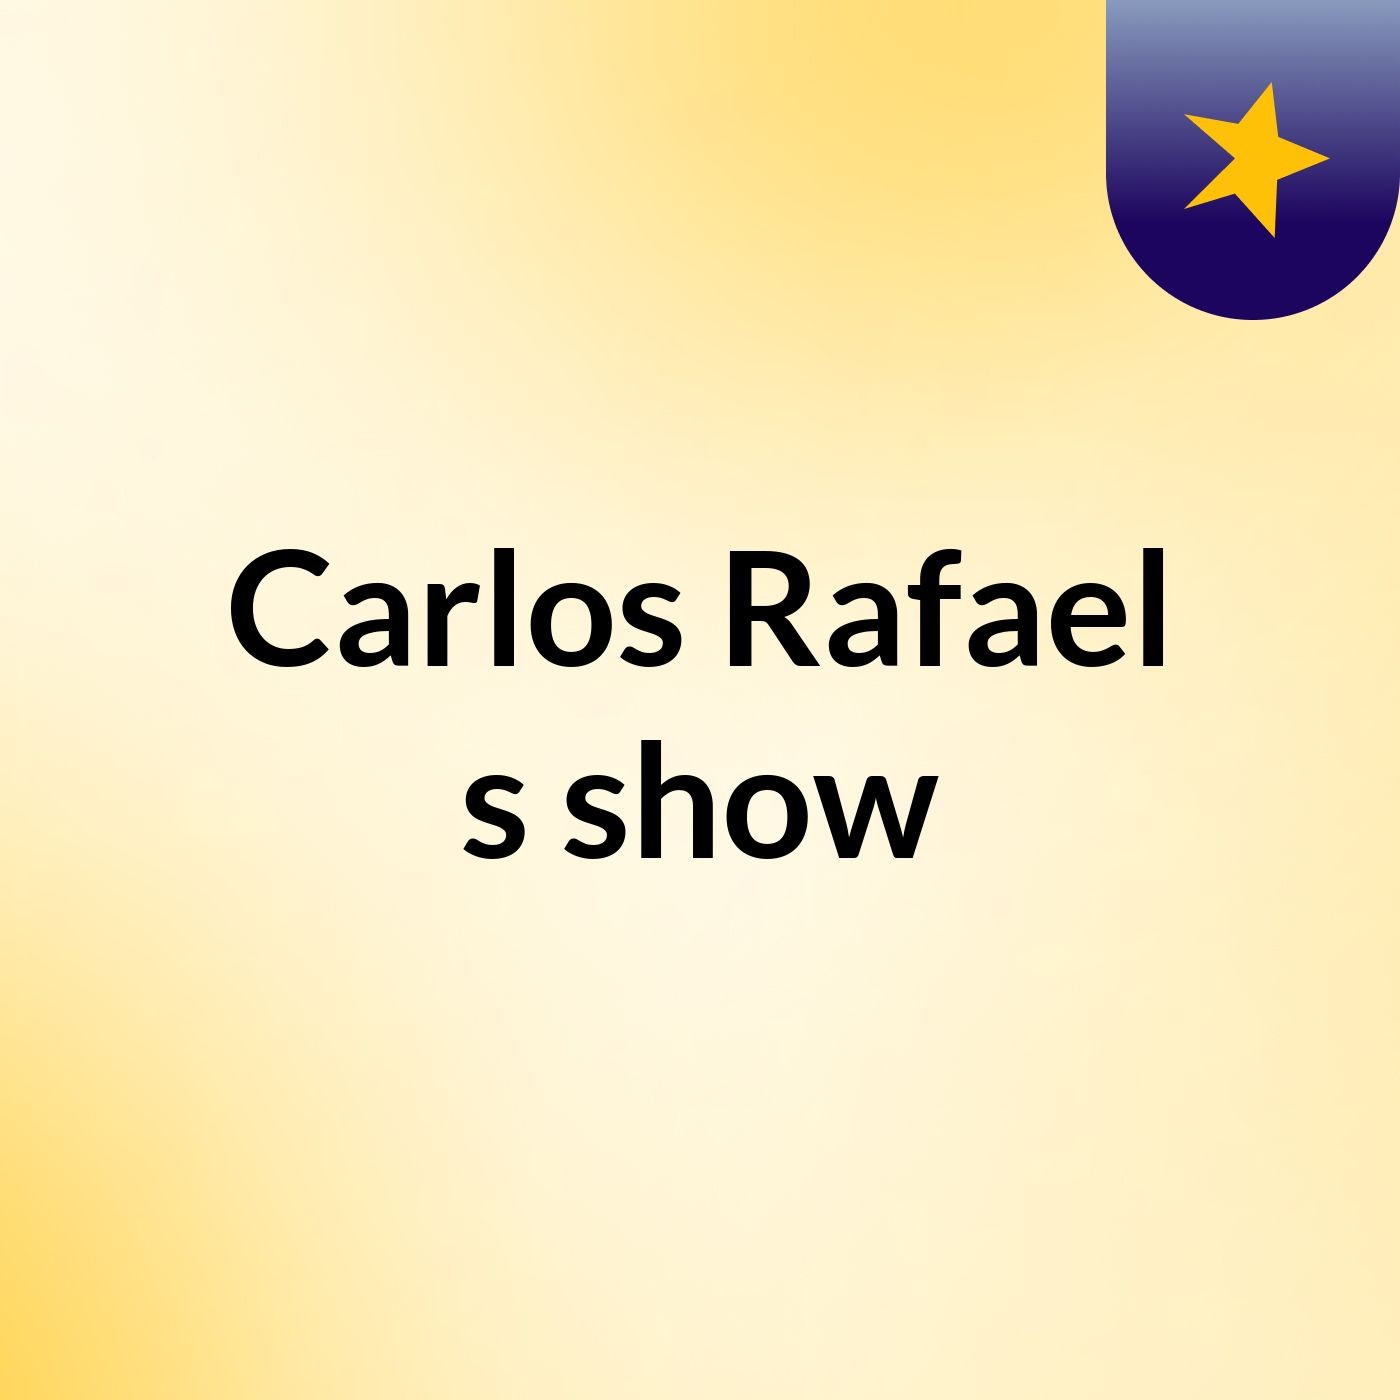 Carlos Rafael's show